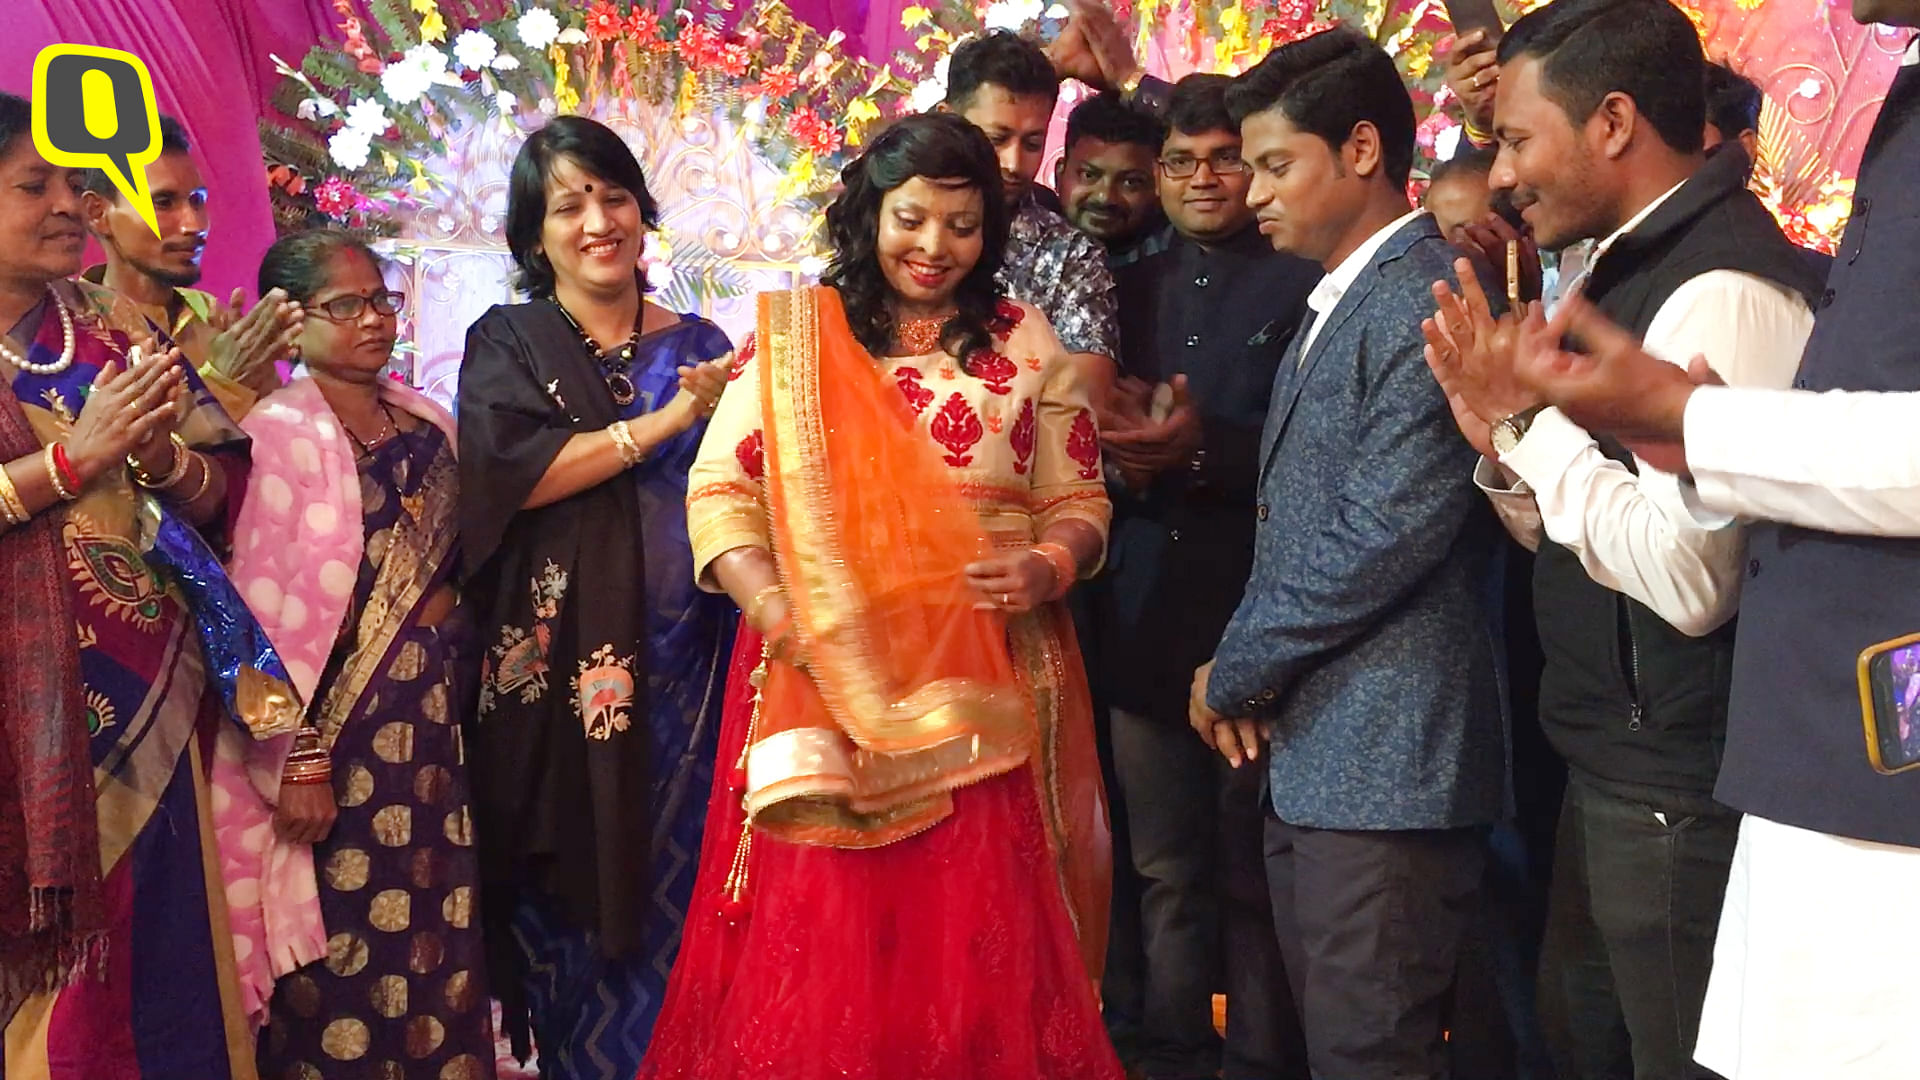 Rani and Saroj got engaged on 14 February